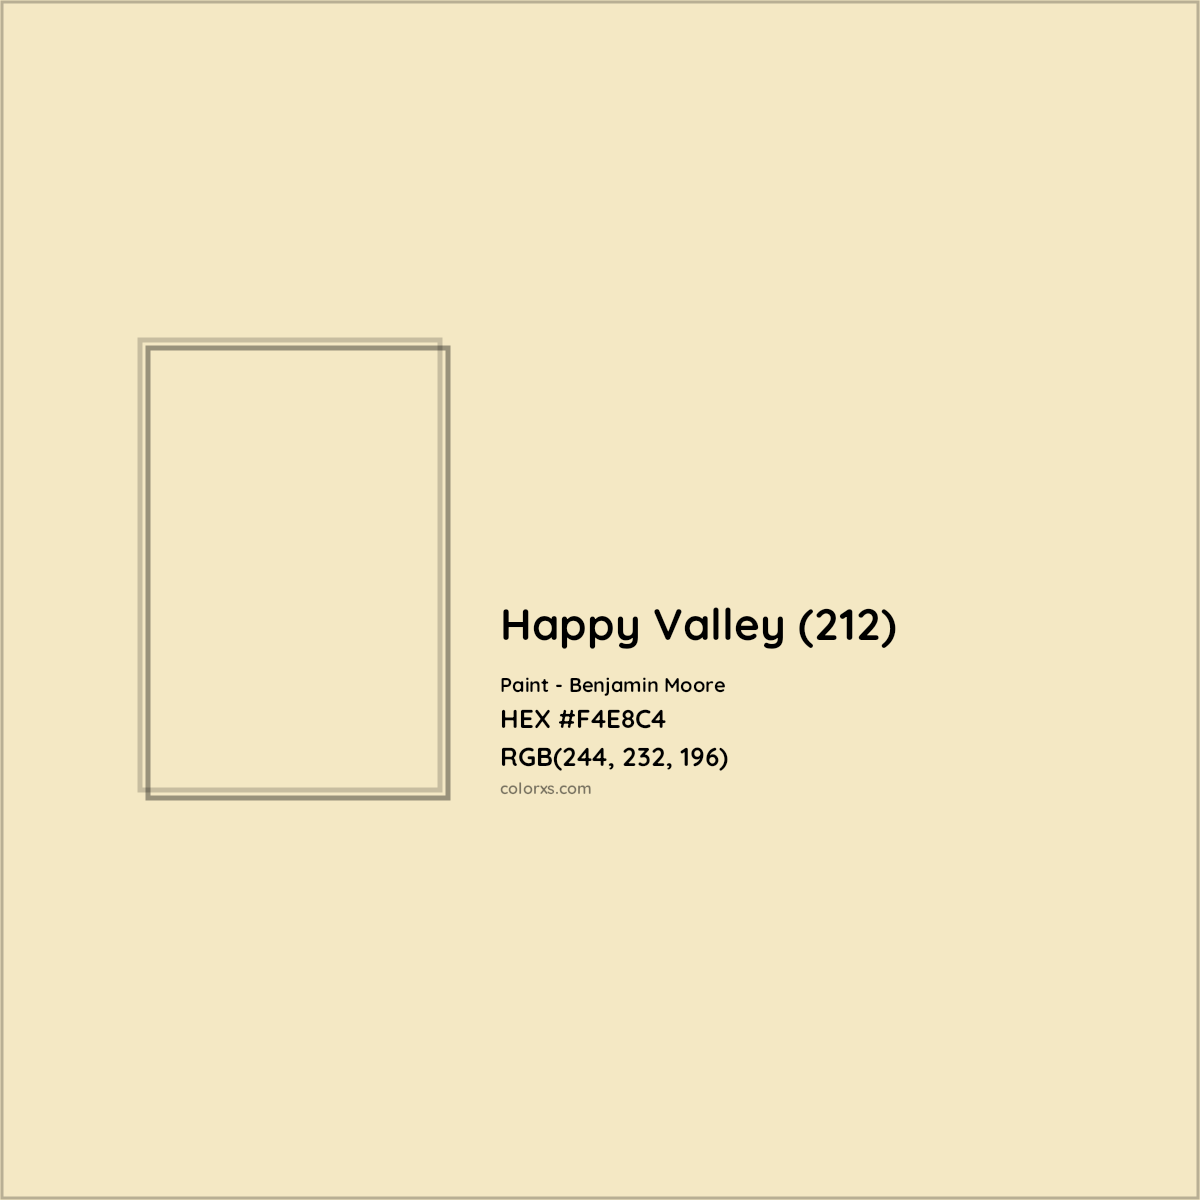 HEX #F4E8C4 Happy Valley (212) Paint Benjamin Moore - Color Code